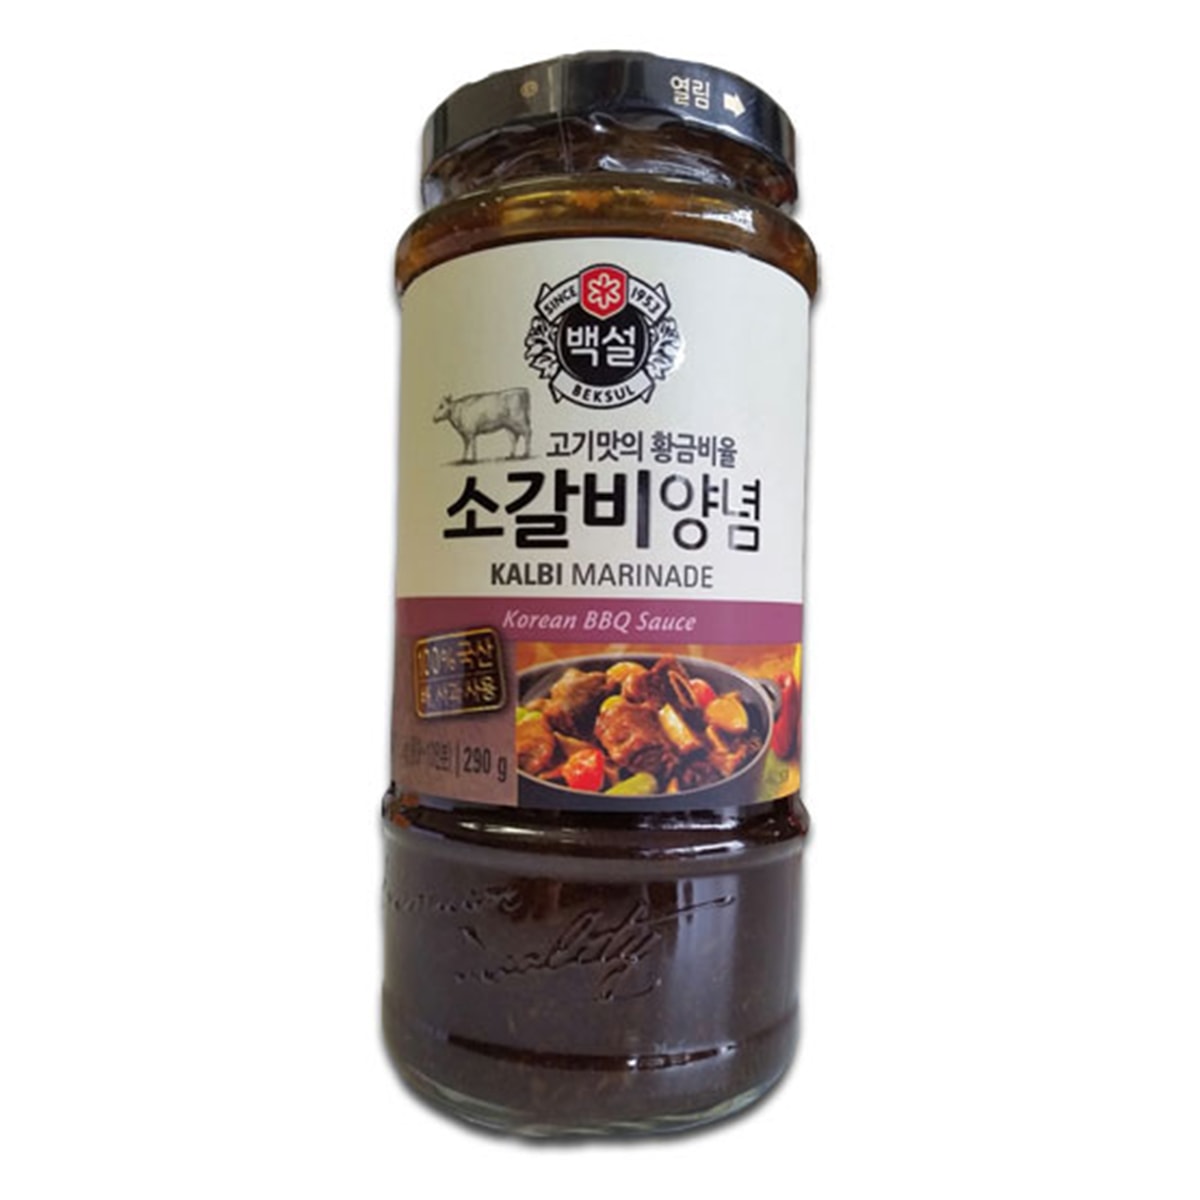 Buy CJ Beksul Beef Kalbi Marinade (Korean BBQ Sauce) - 290 gm